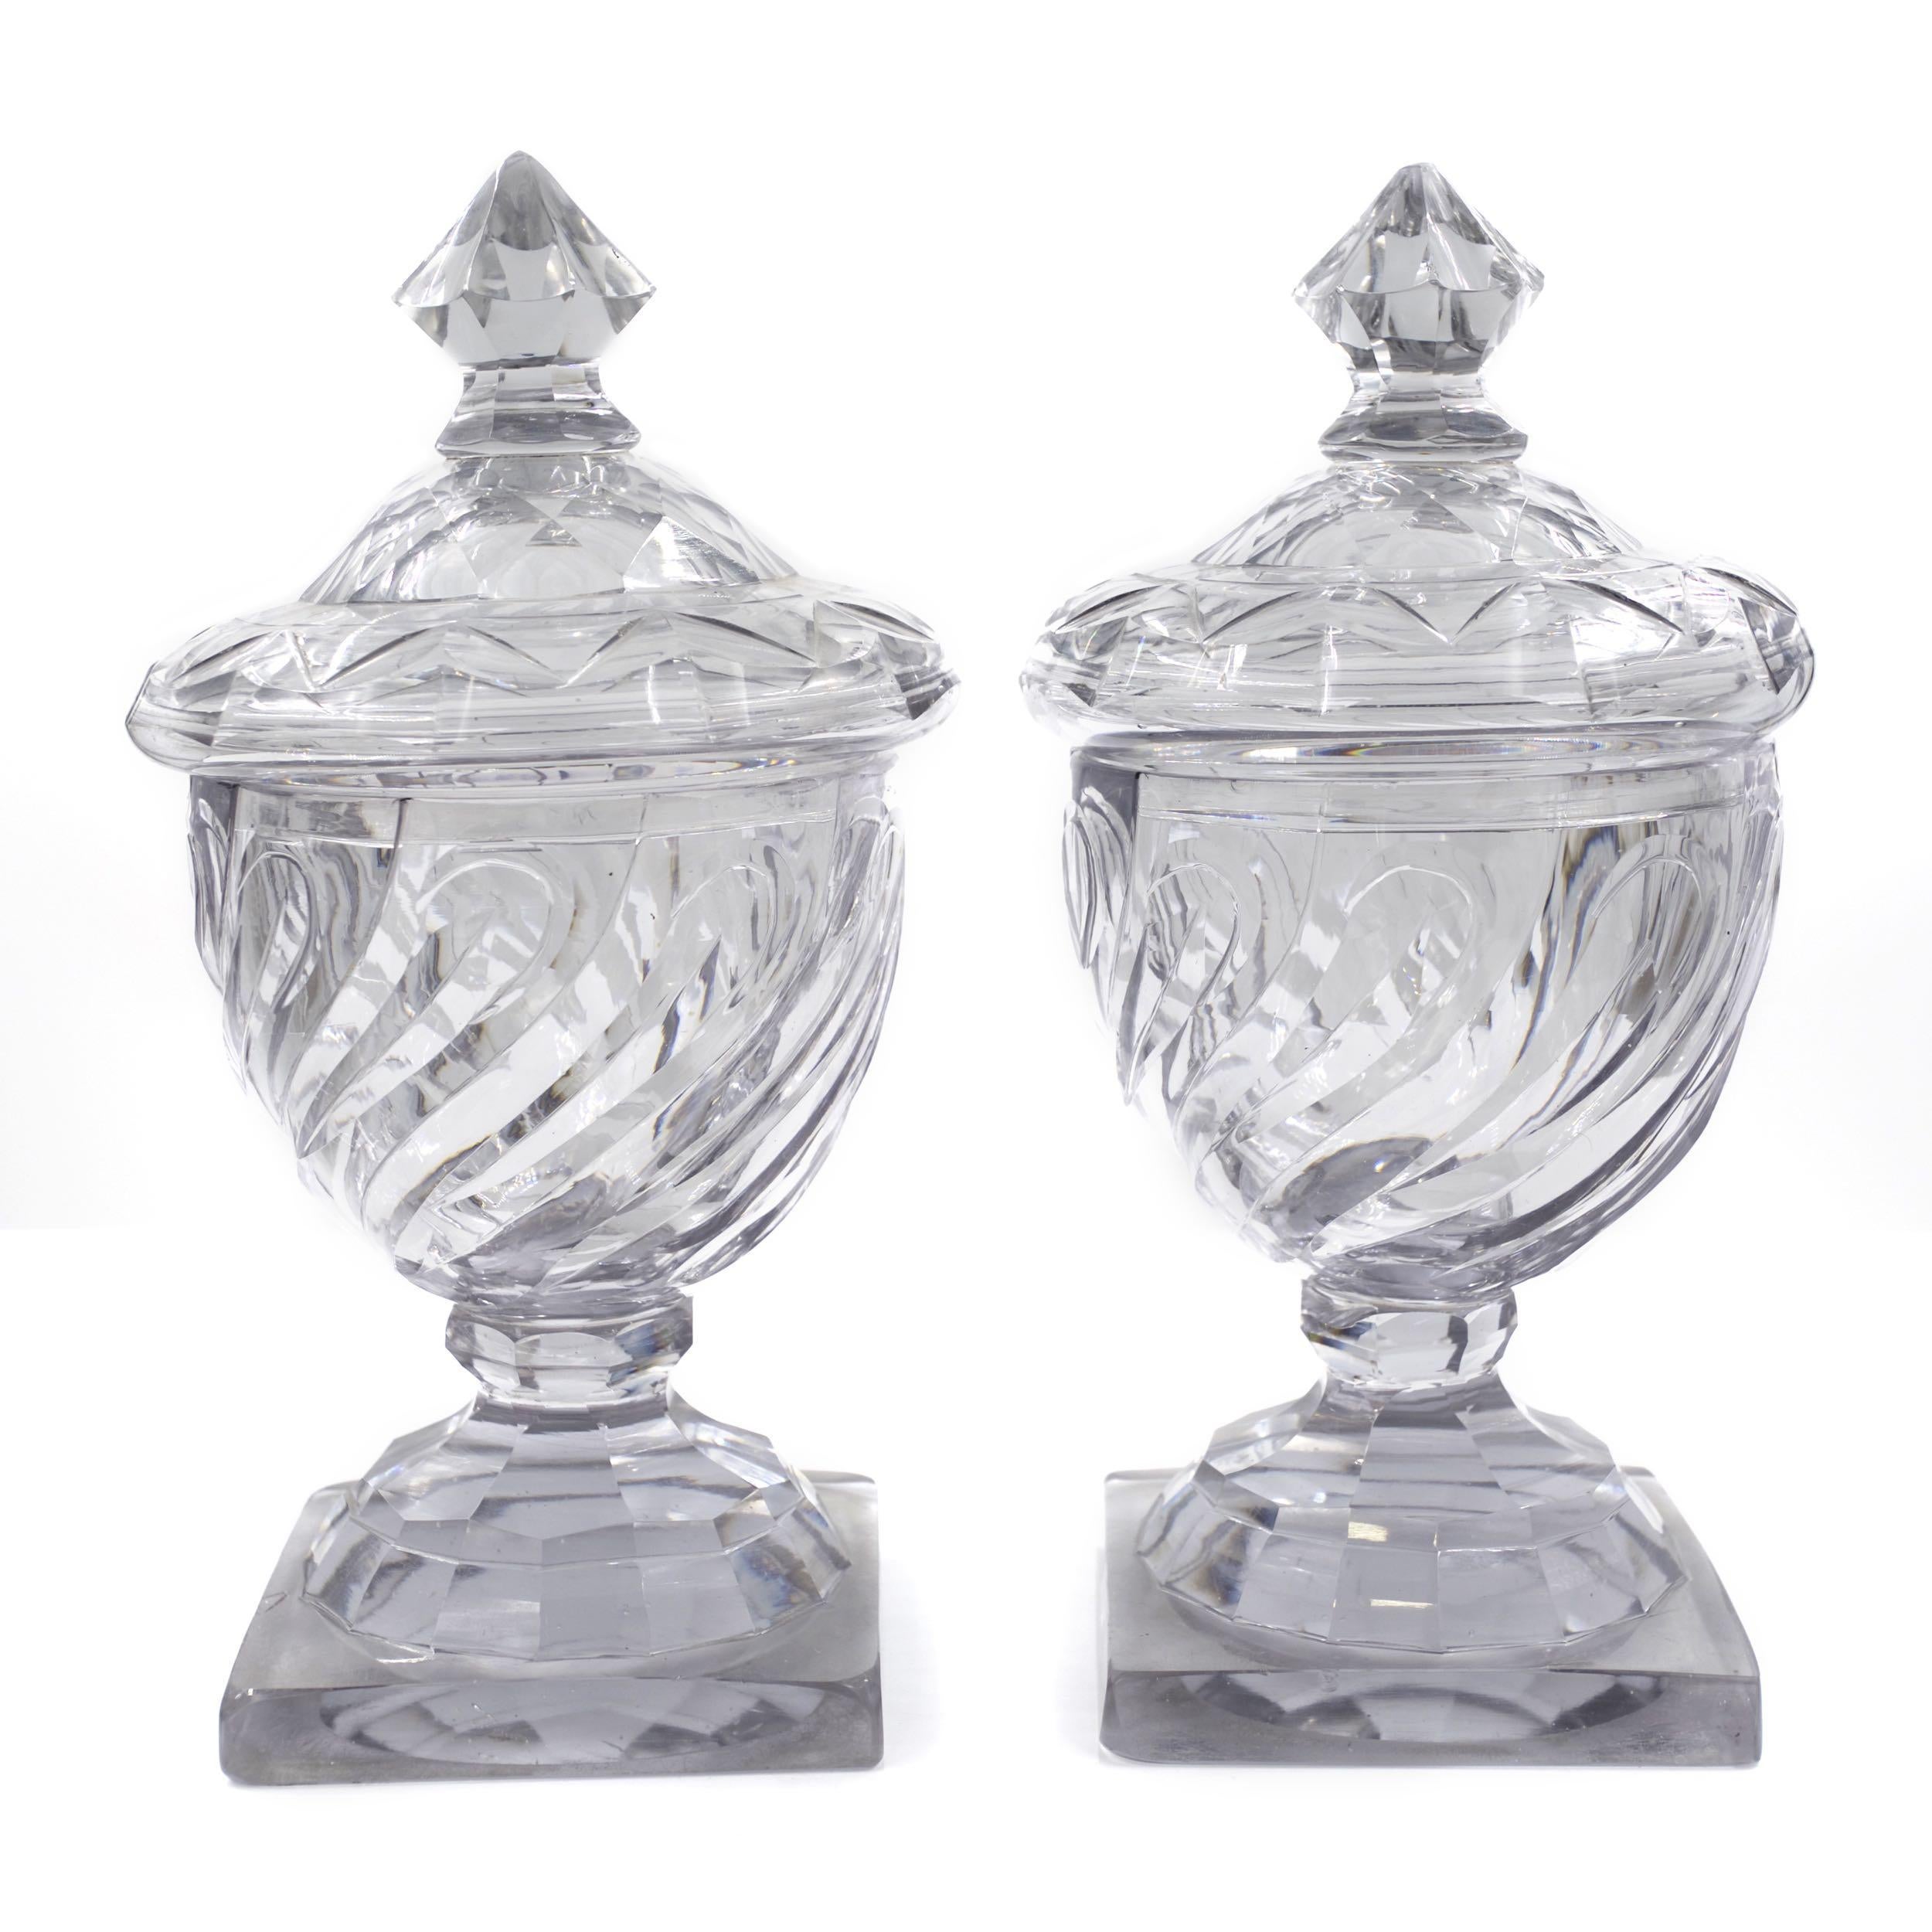 British 18th Century Pair of English Georgian Cut Swirled Glass Urns with Dome Lids